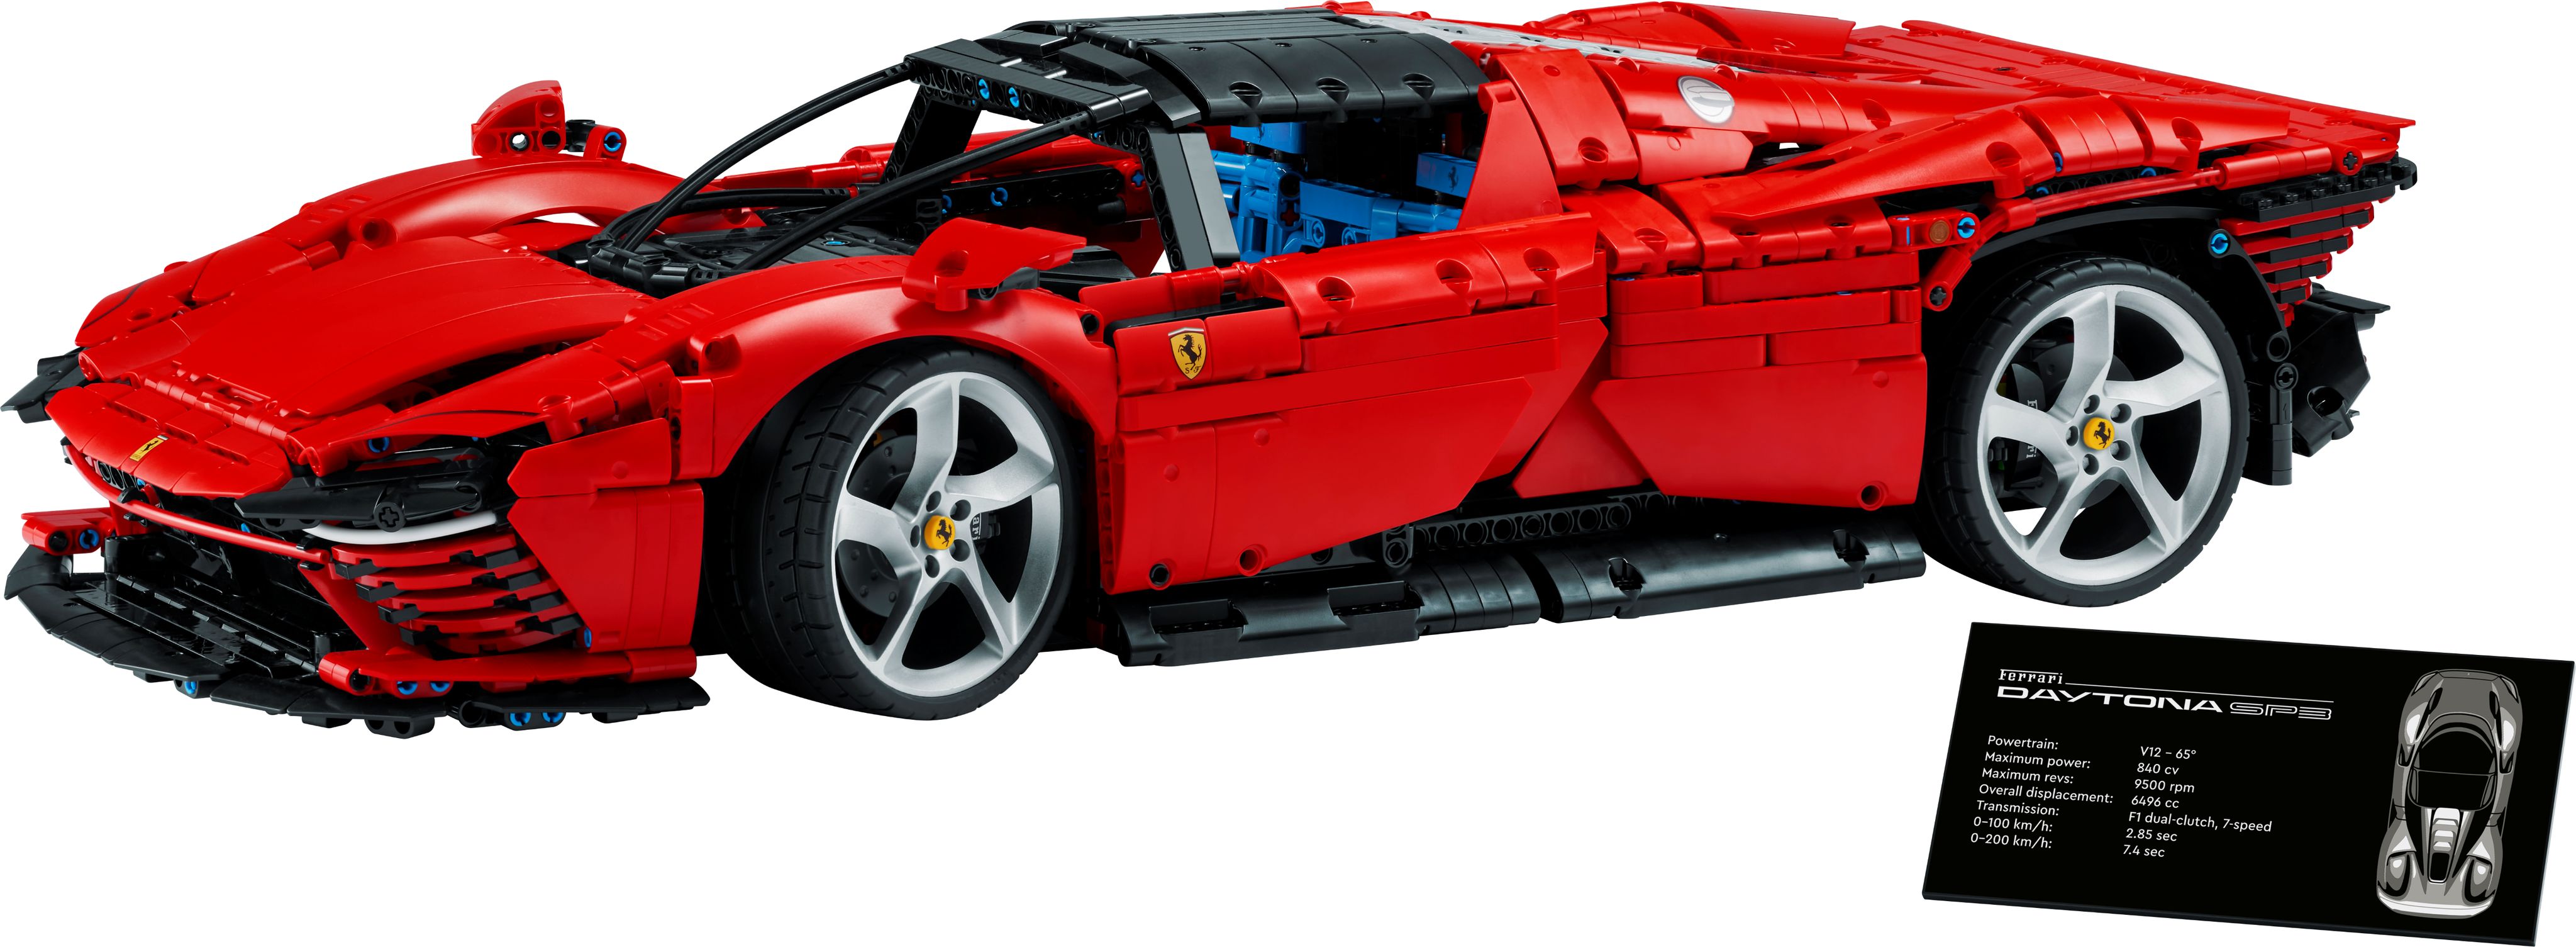 LEGO Technic Ferrari Daytona sp3